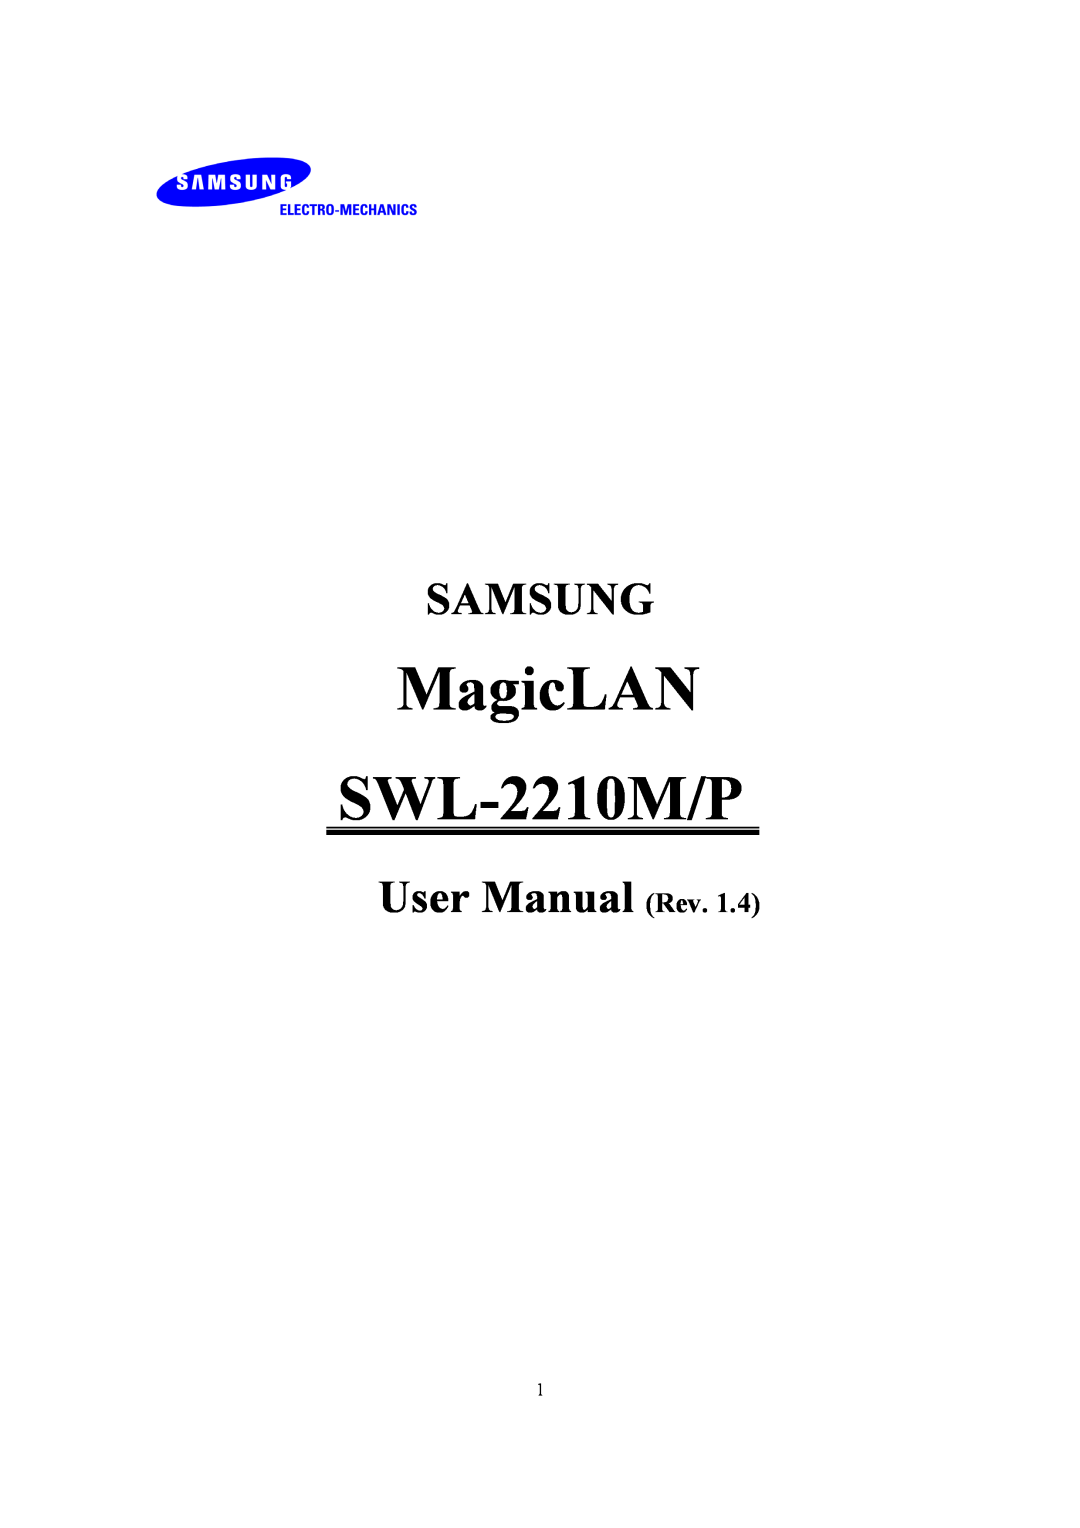 Samsung SWL-2210P user manual MagicLAN SWL-2210M/P, Samsung, User Manual Rev 